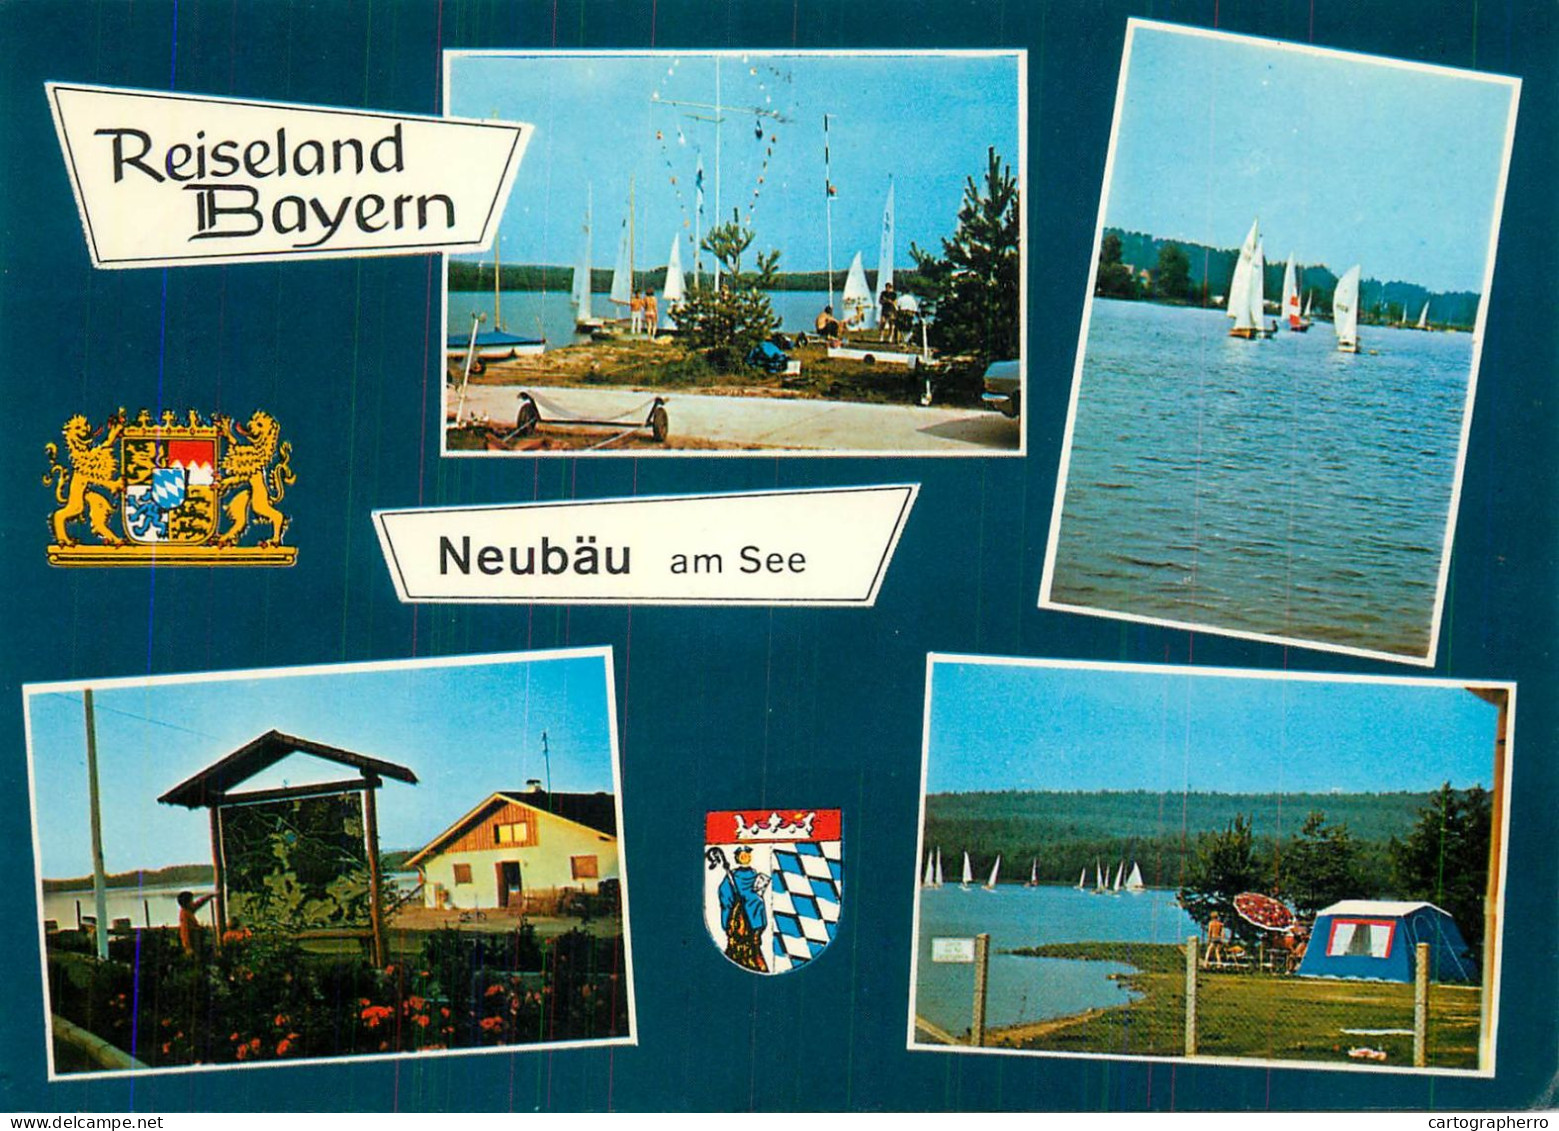 Navigation Sailing Vessels & Boats Themed Postcard Reiseland Bayern Neubau - Segelboote